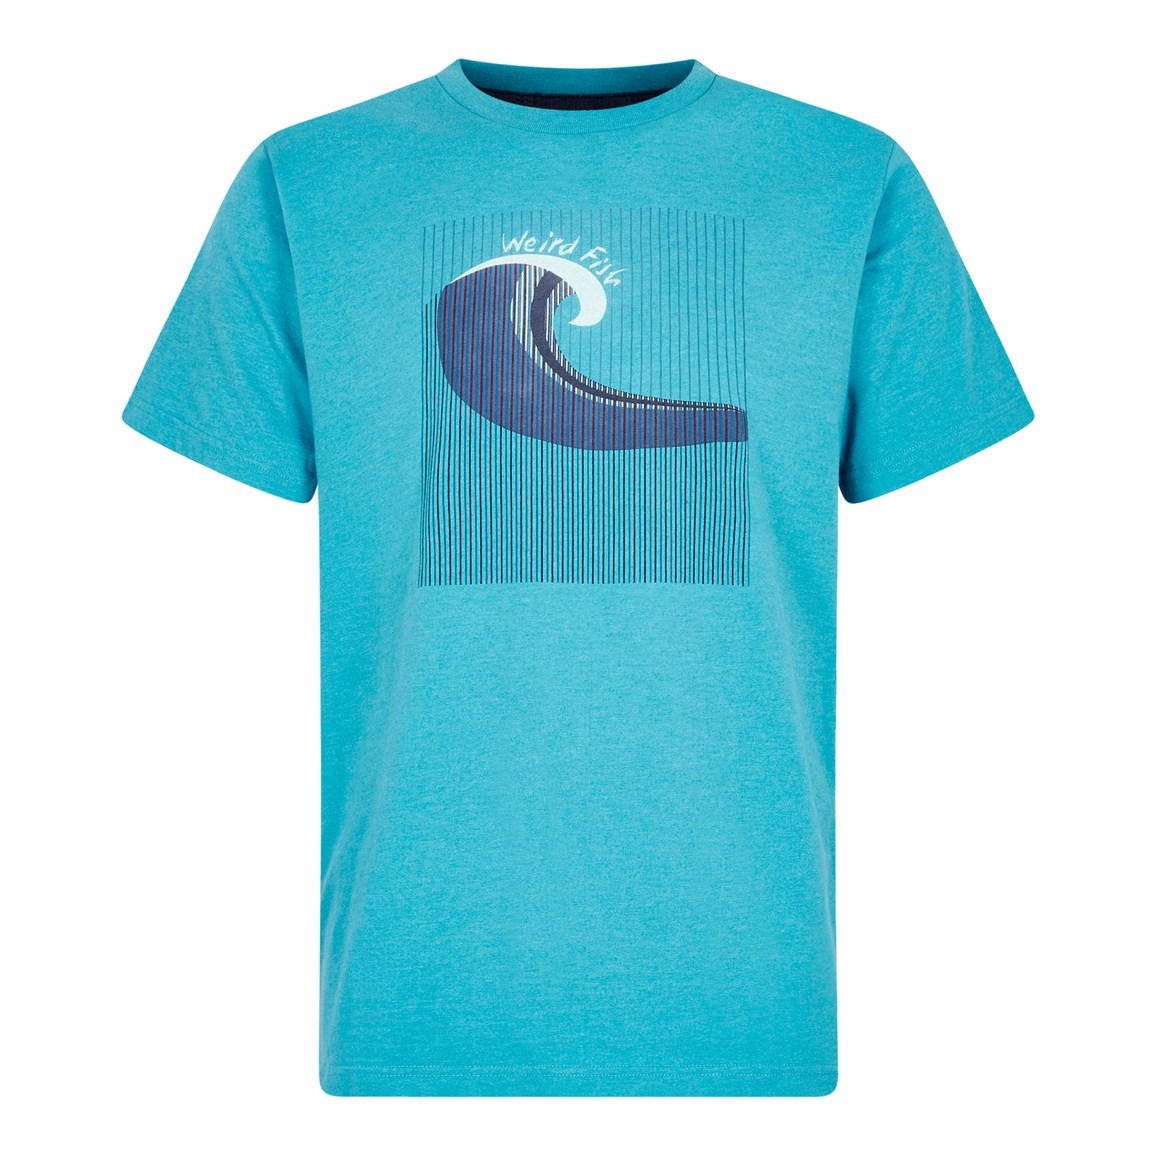 Weird Fish Tidal Organic Cotton Graphic T-Shirt Pagoda Blue Size L